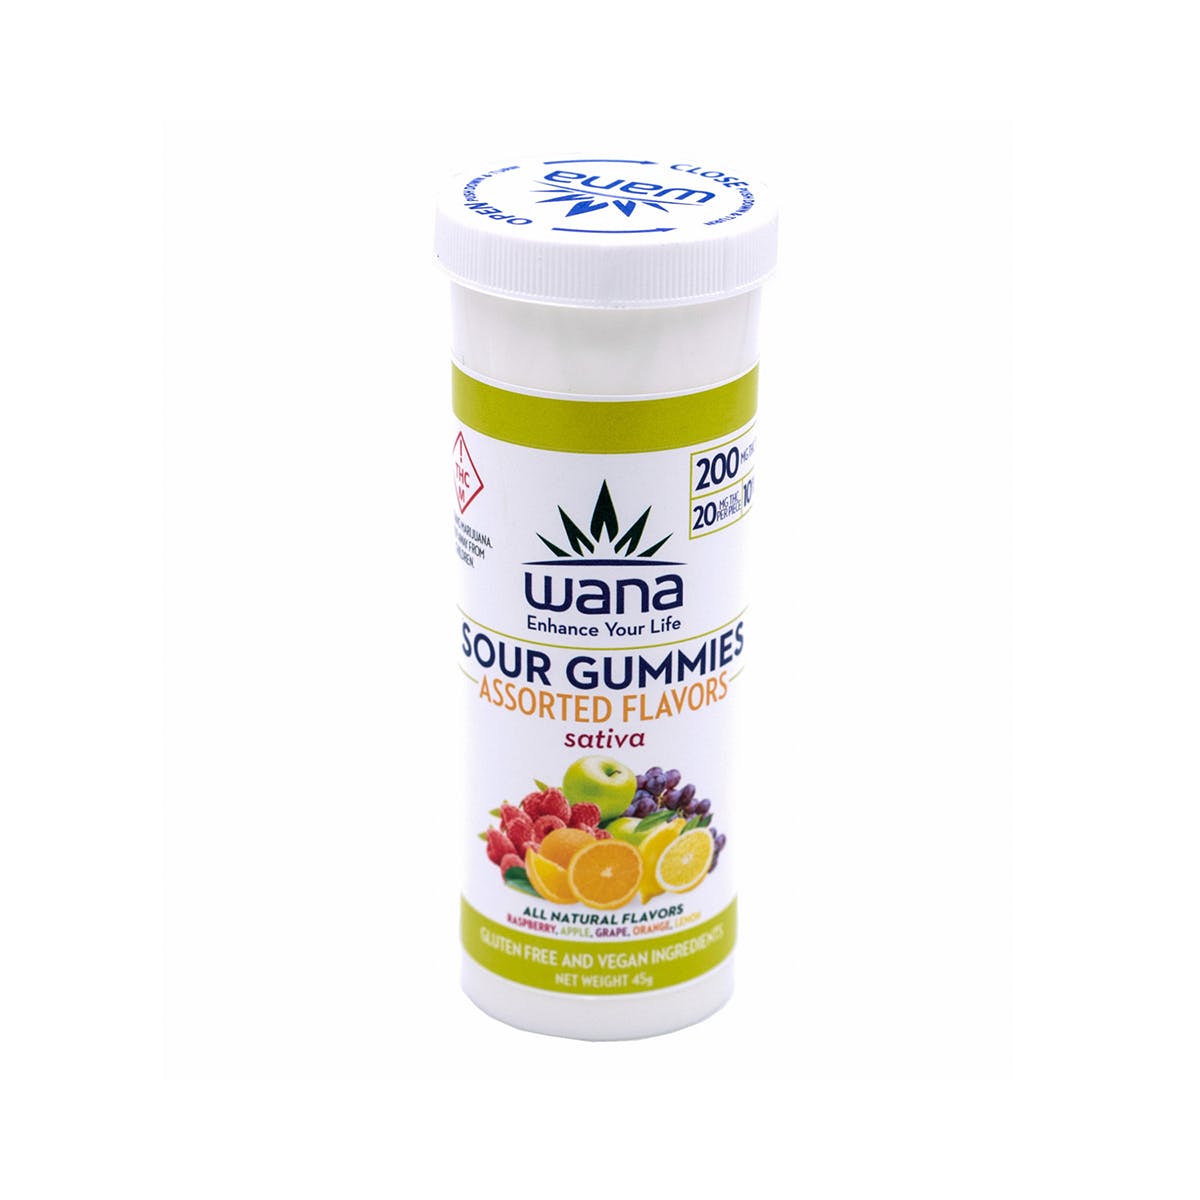 marijuana-dispensaries-herbal-remedies-denver-in-denver-sour-assorted-gummies-200mg-sativa-med